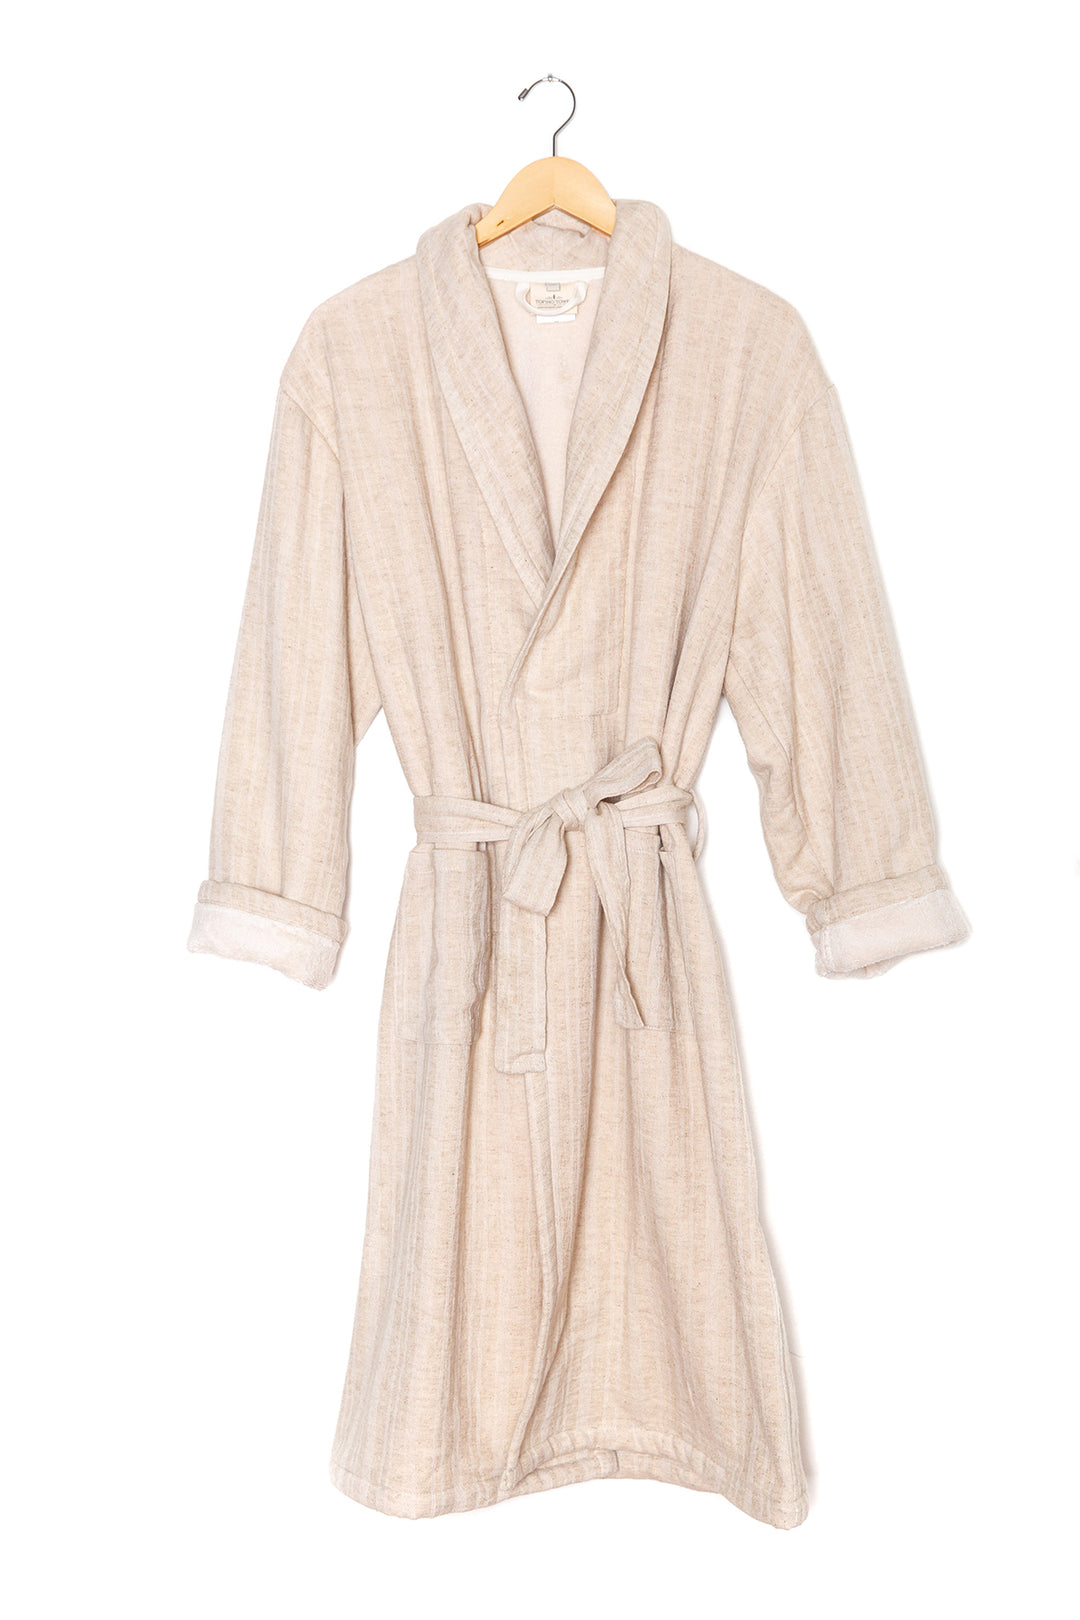 Ophelia Hooded Bath Robe - Luxury Bath Linen - Schweitzer Linen